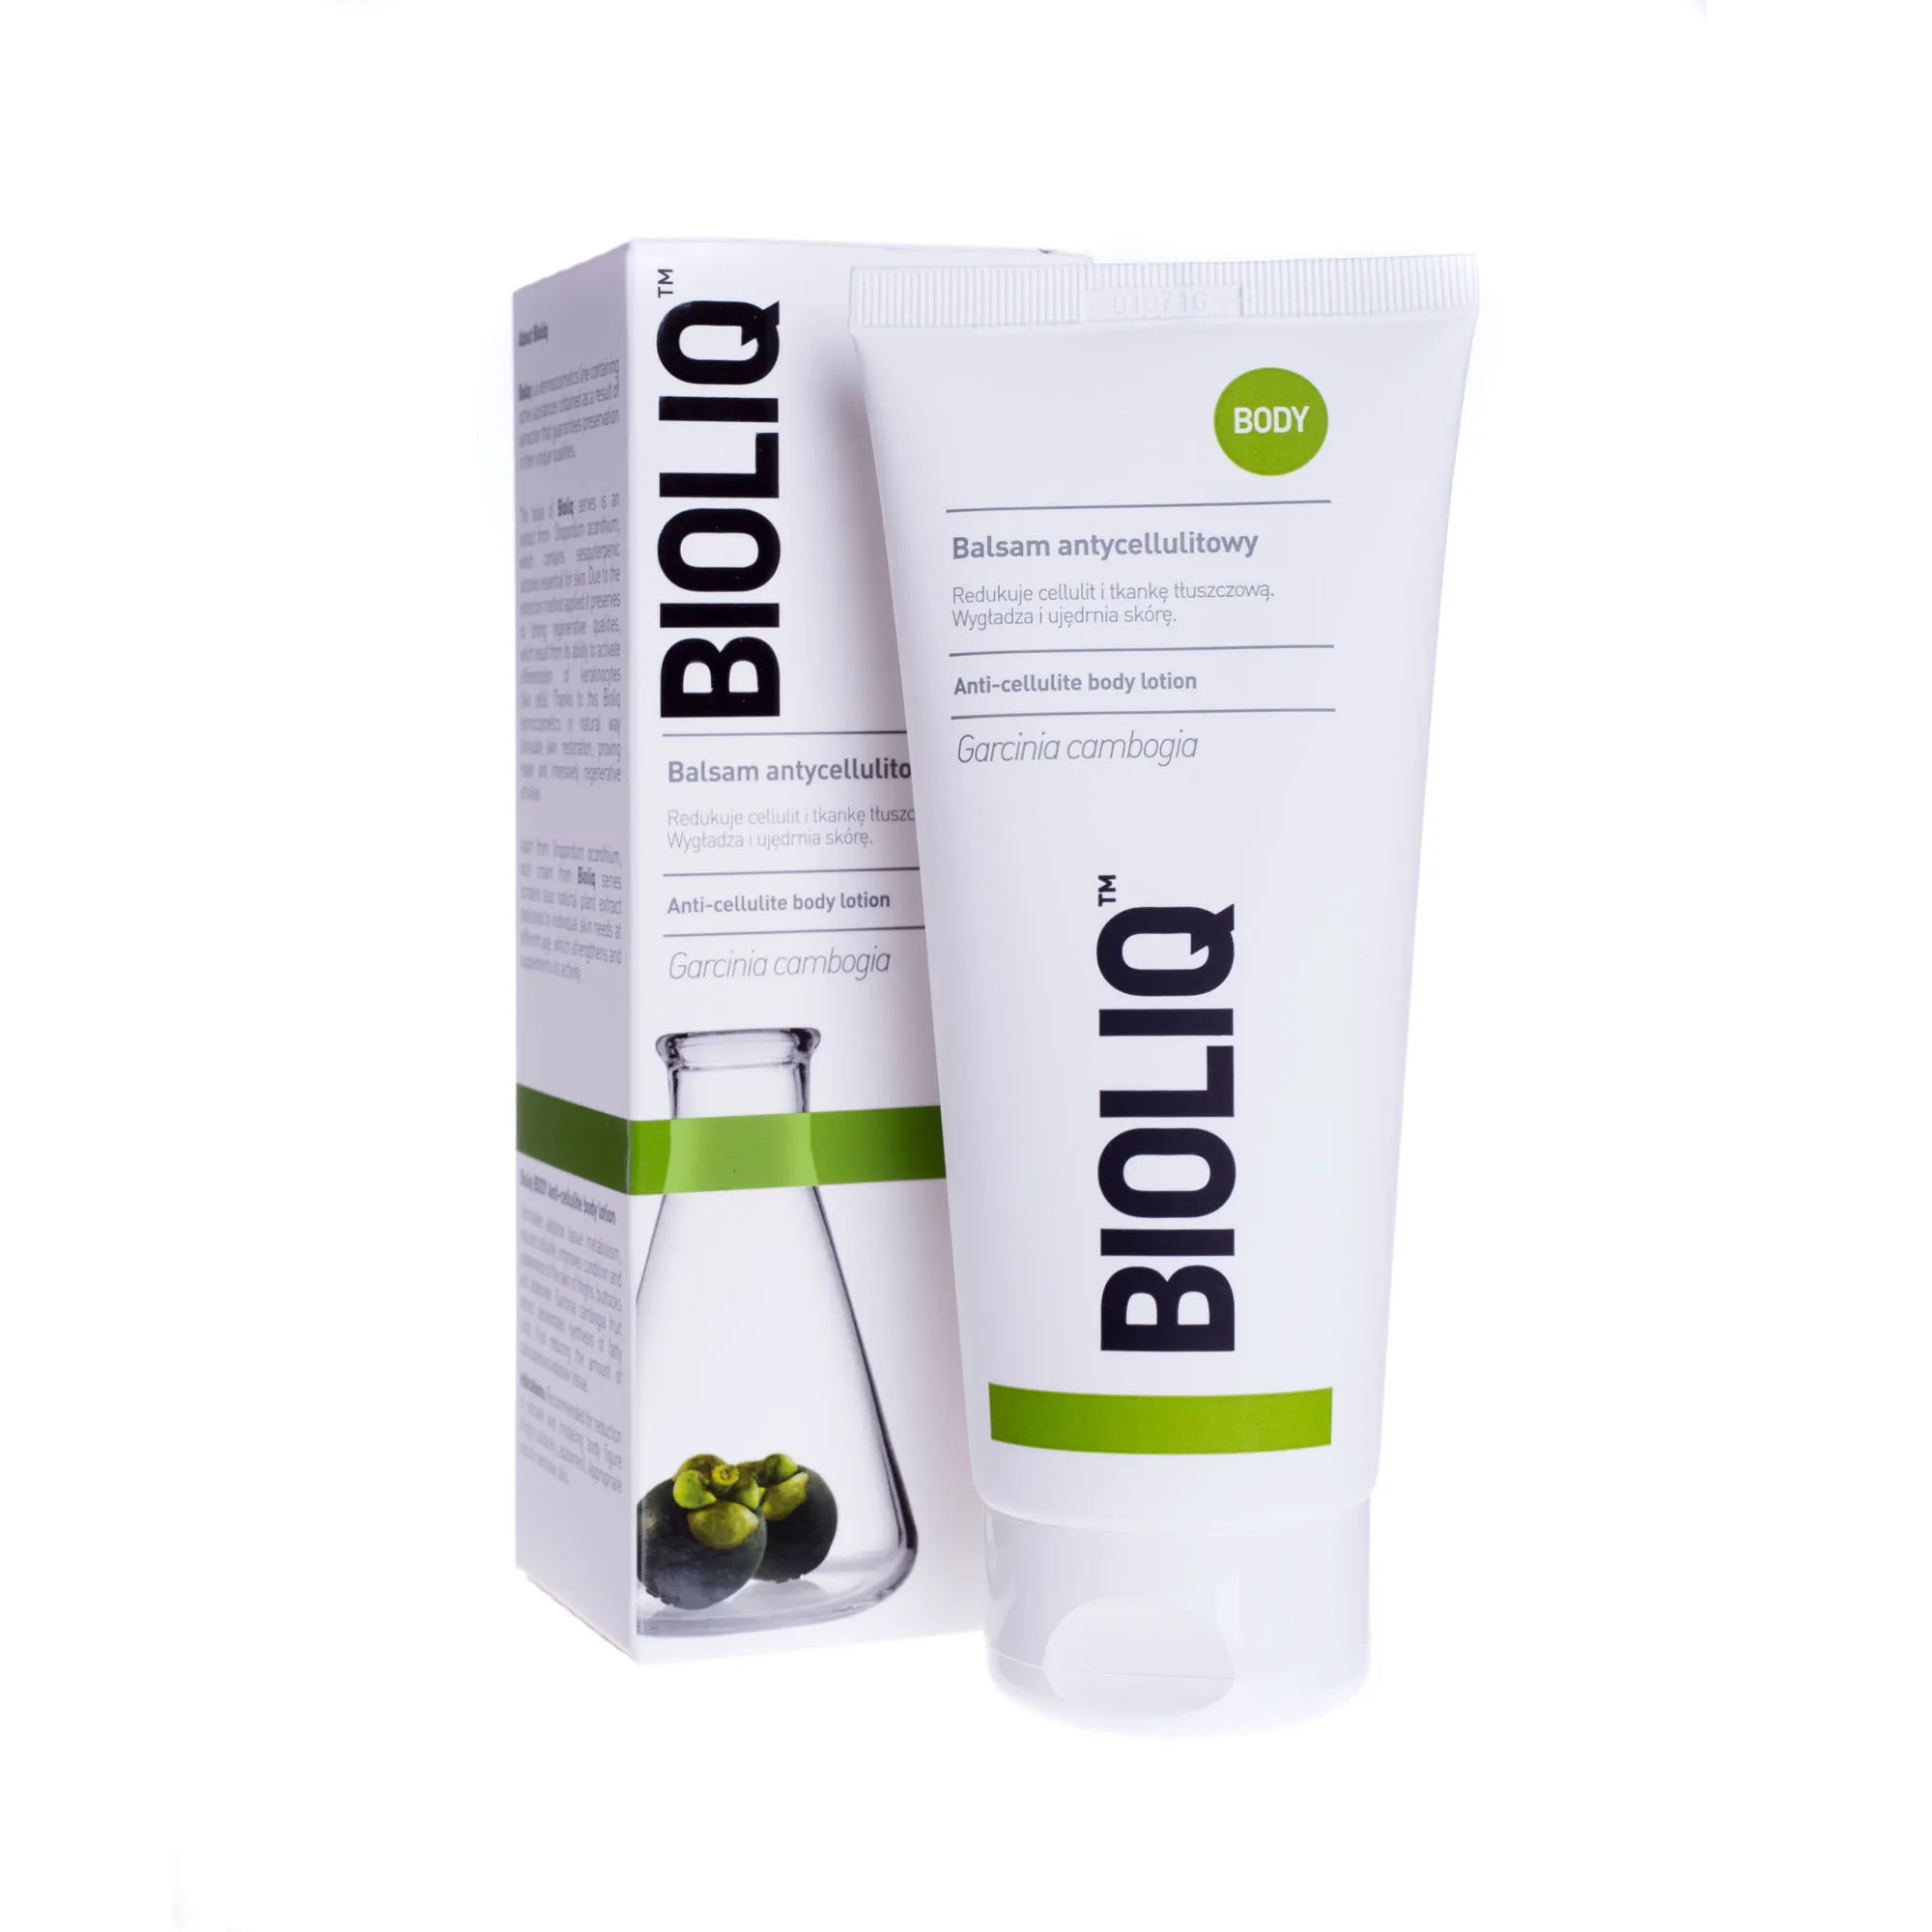 Bioliq Body, balsam antycellulitowy, 180 ml 